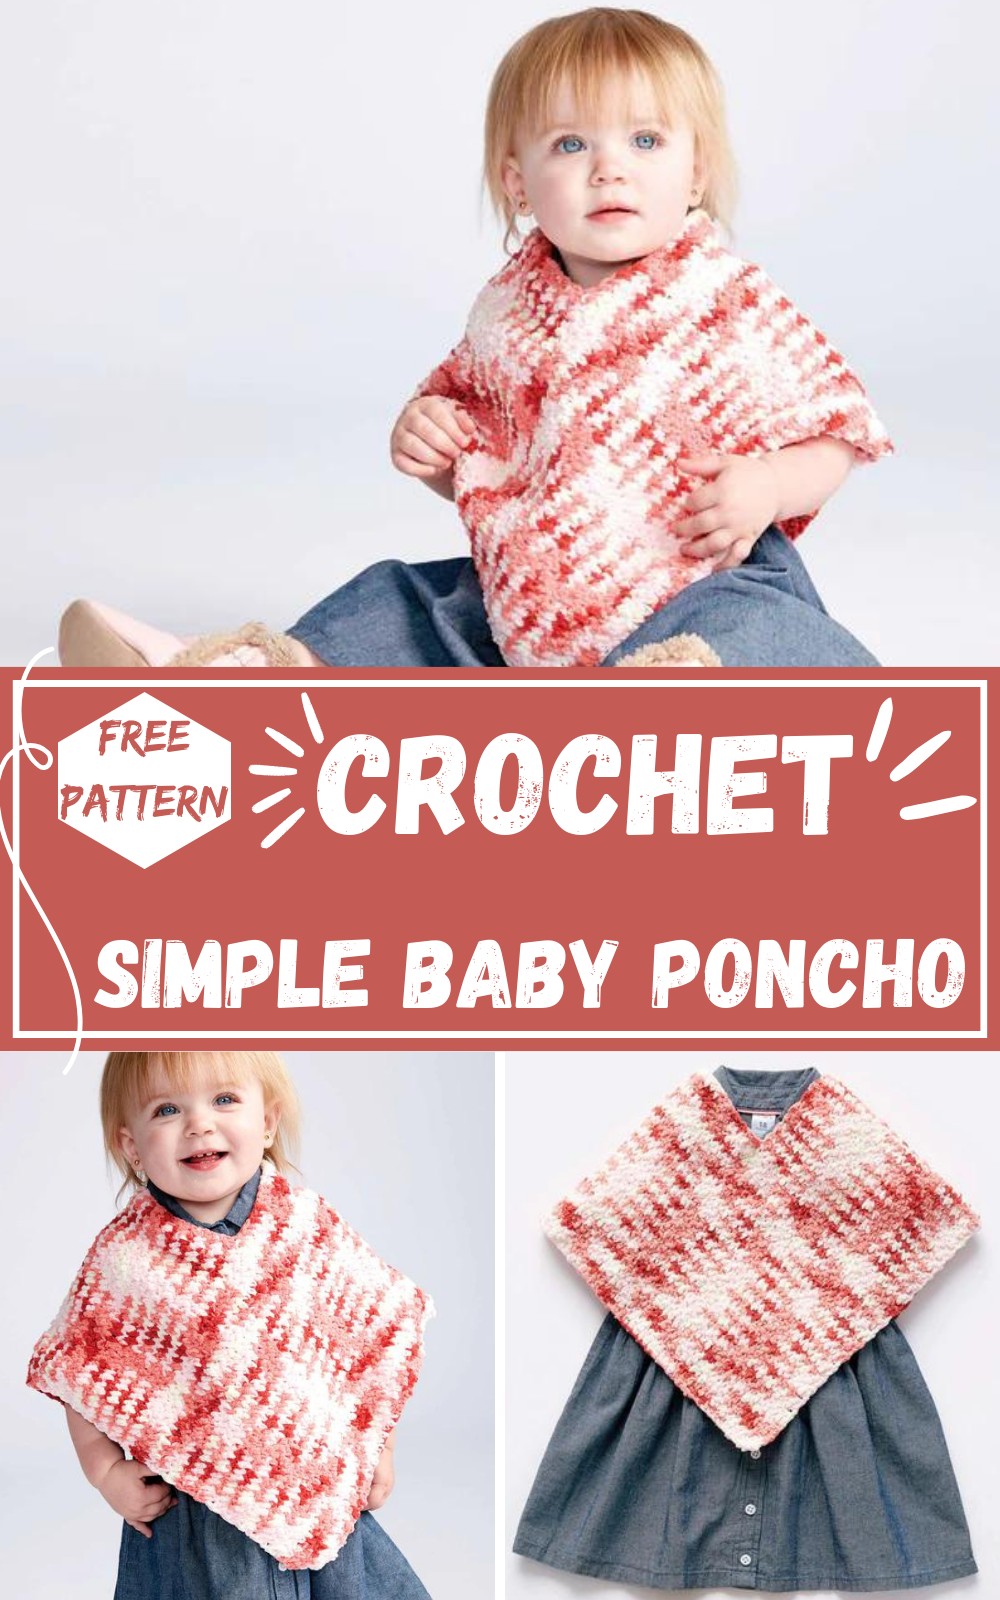 Simple Crochet Baby Poncho